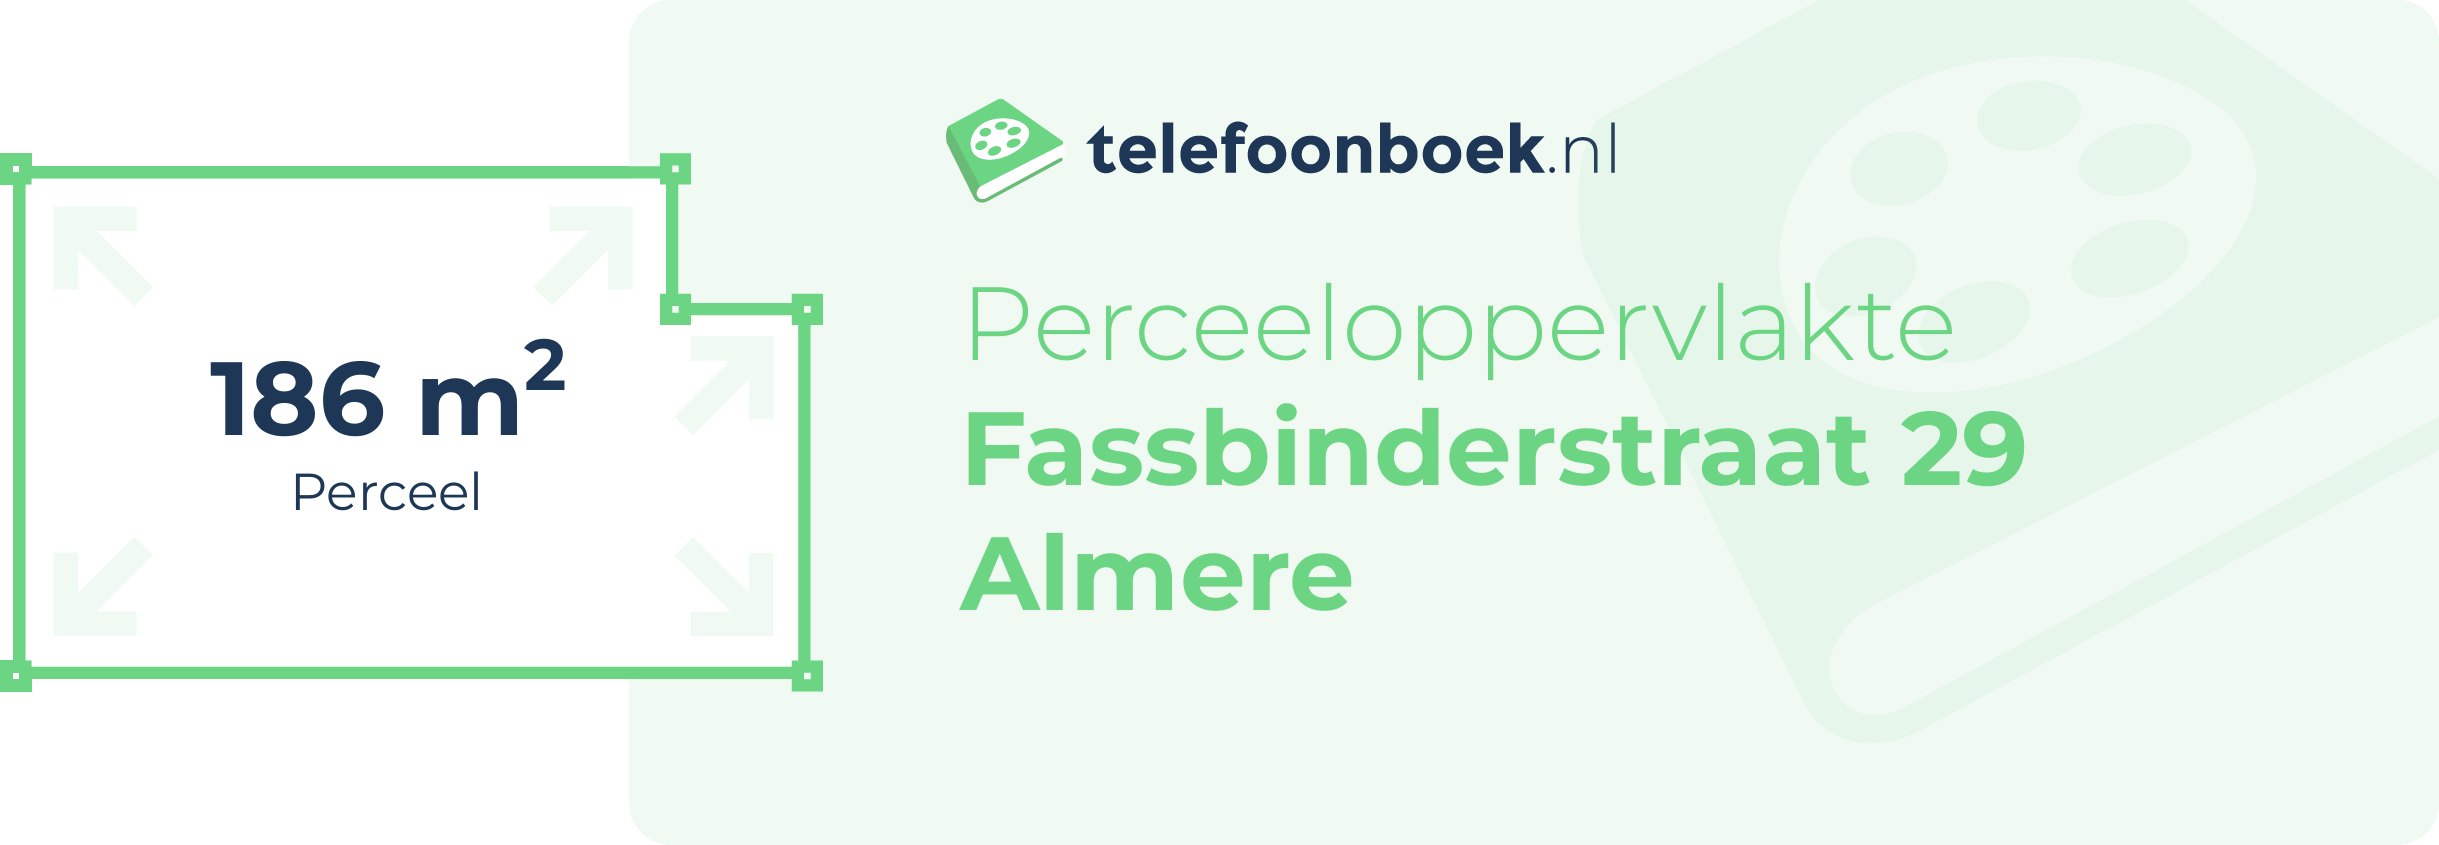 Perceeloppervlakte Fassbinderstraat 29 Almere